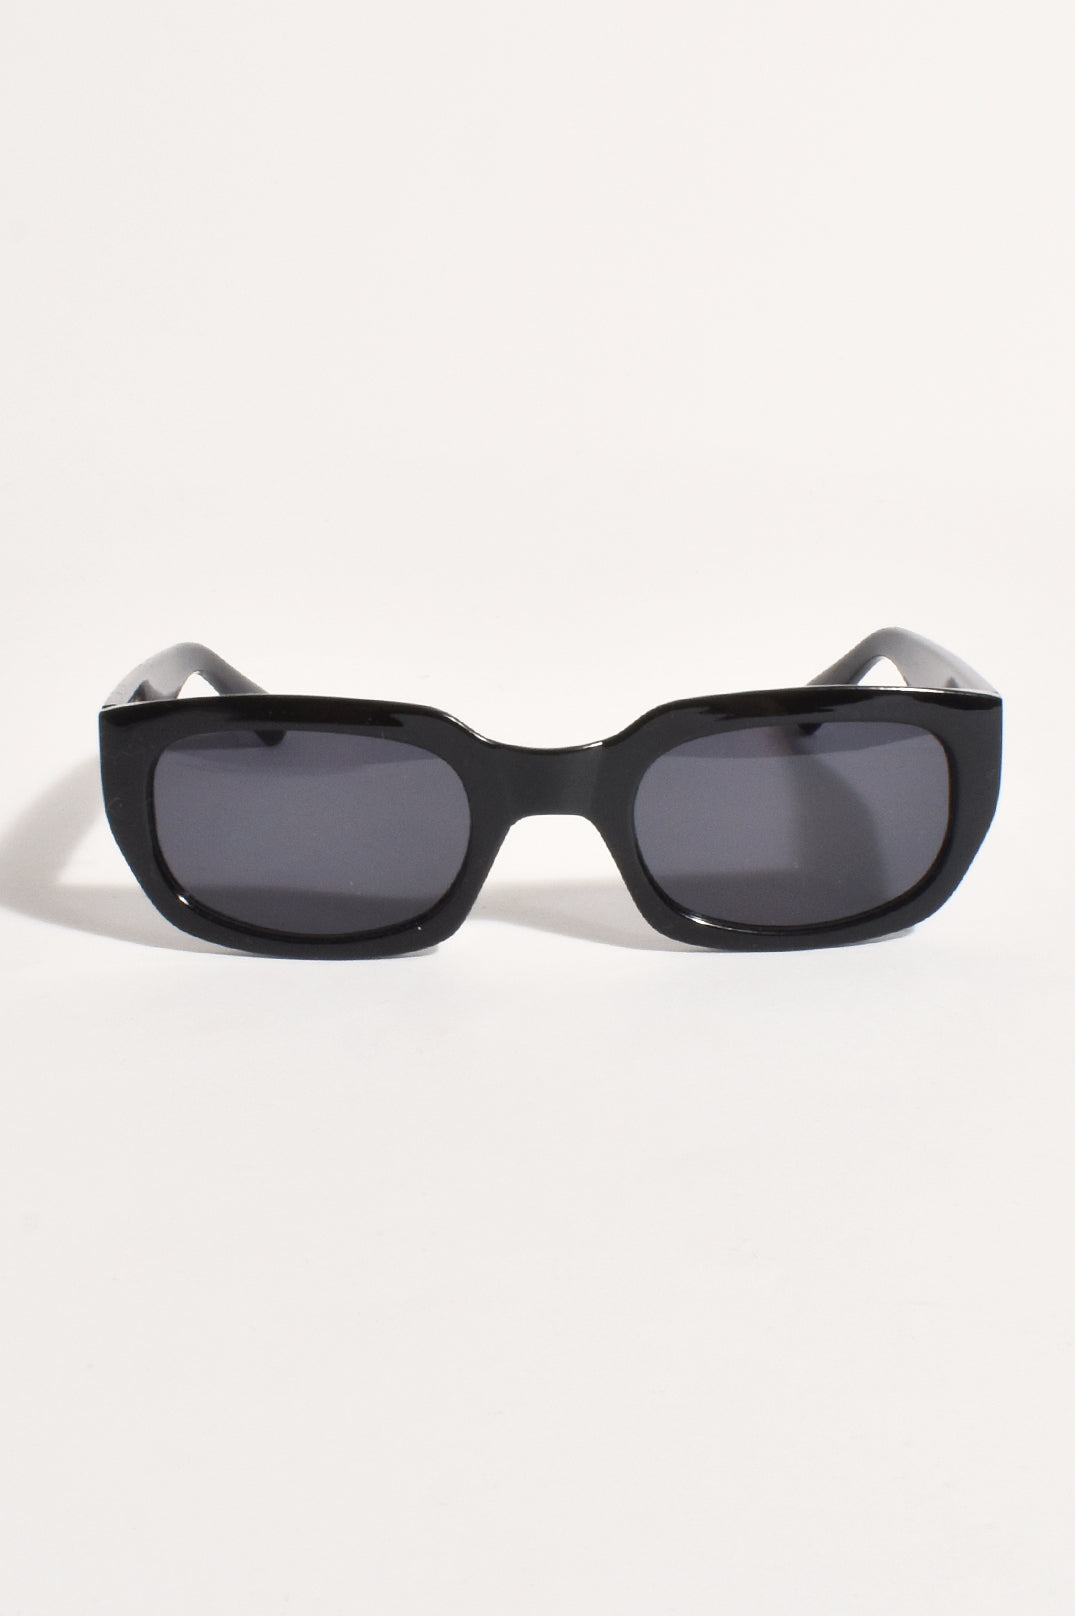 Washington Sunglasses - Black